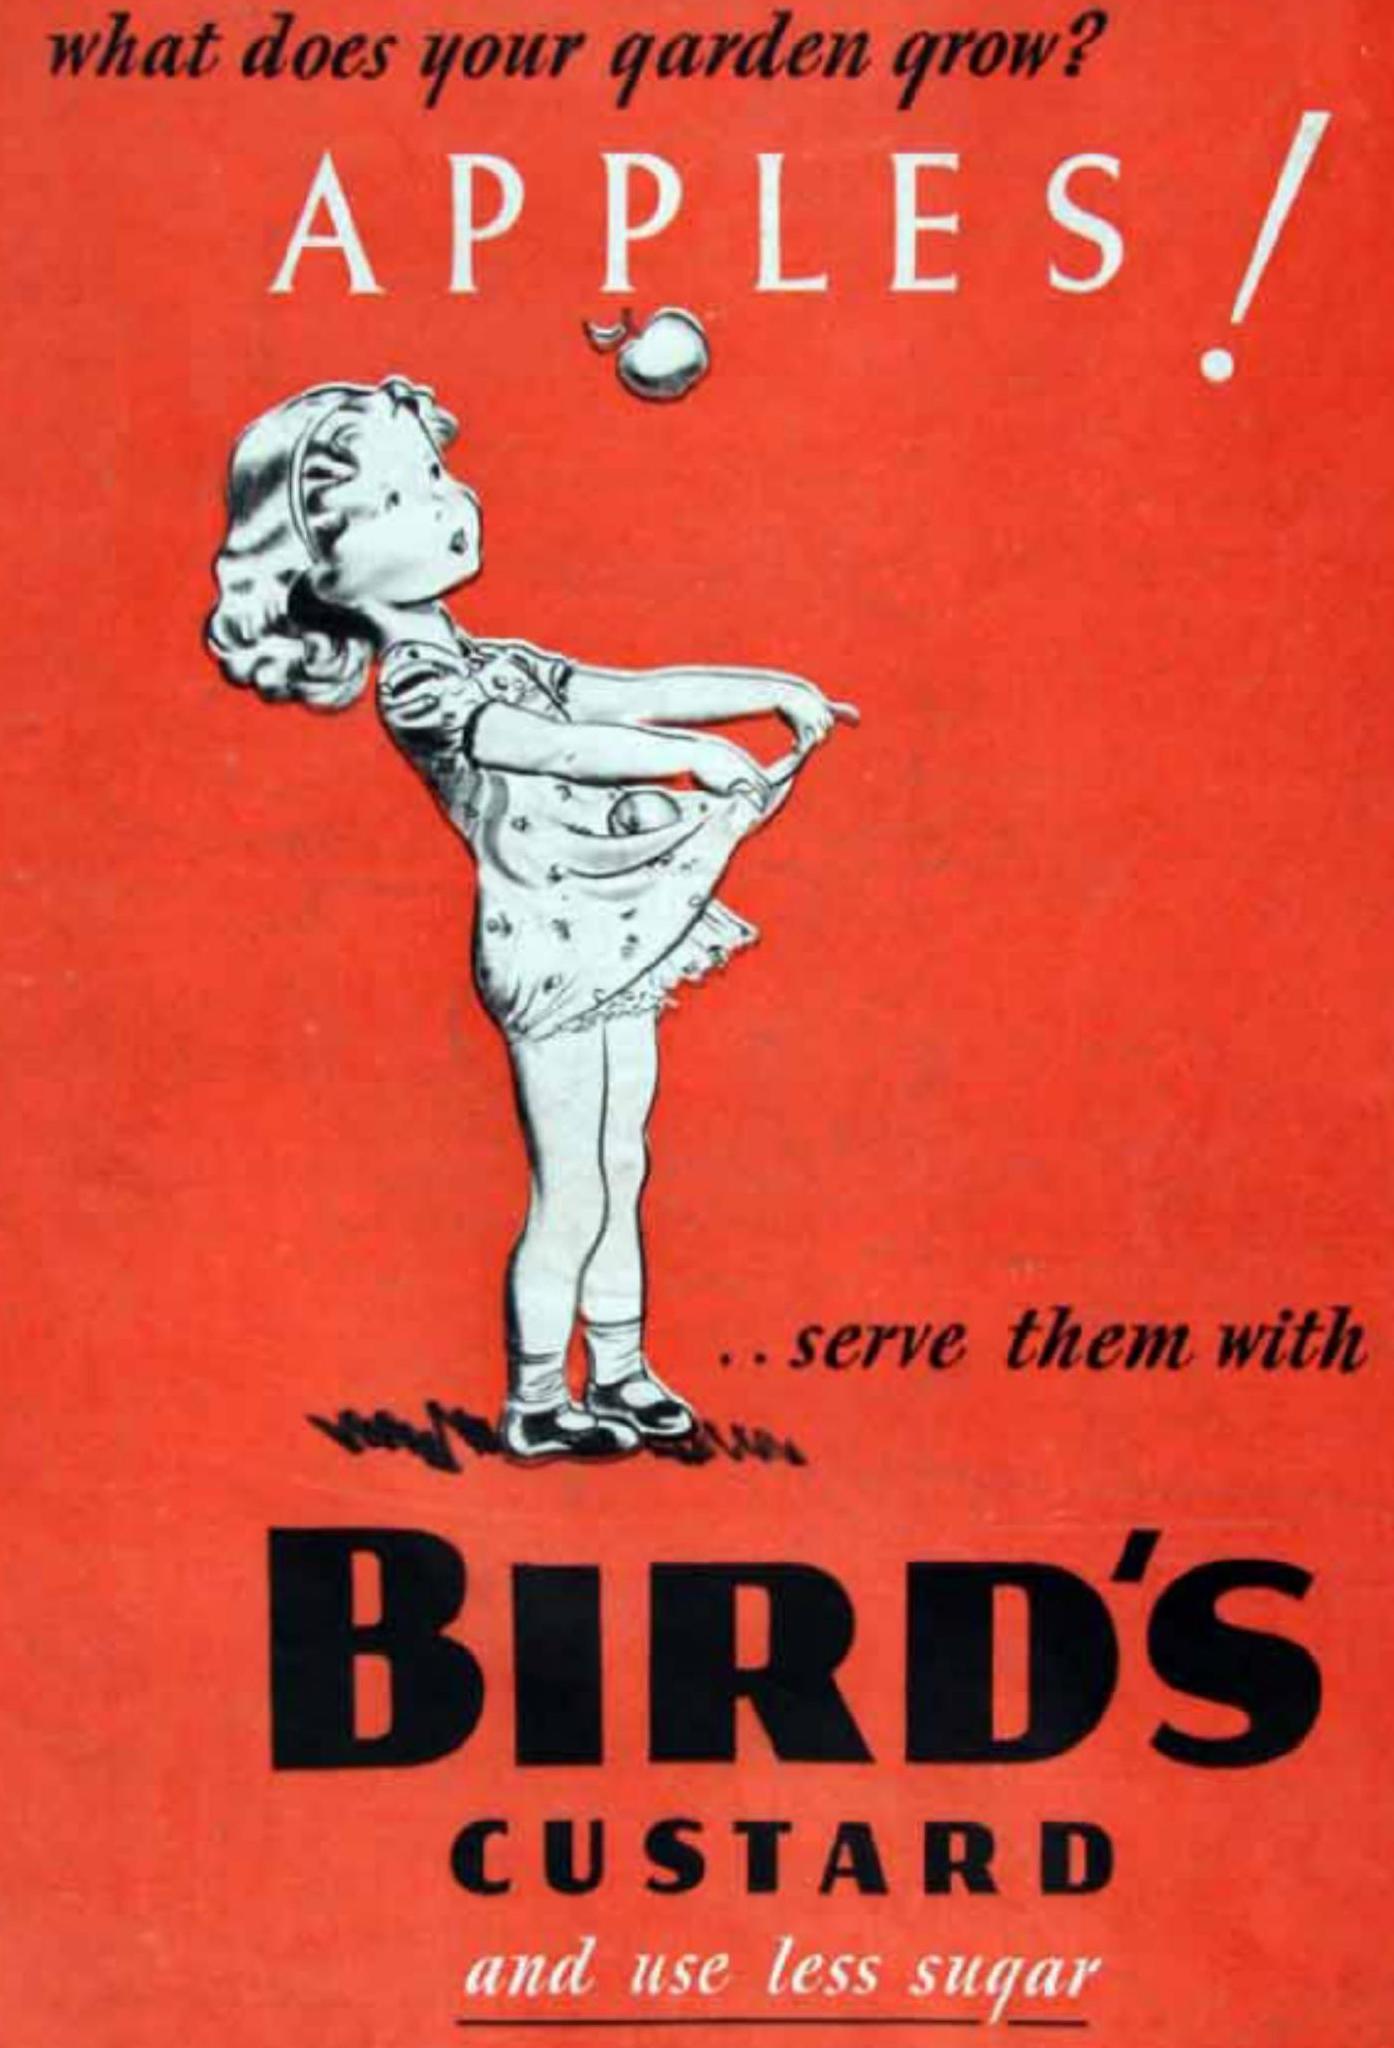 BIRDS: Lindas custard of choice